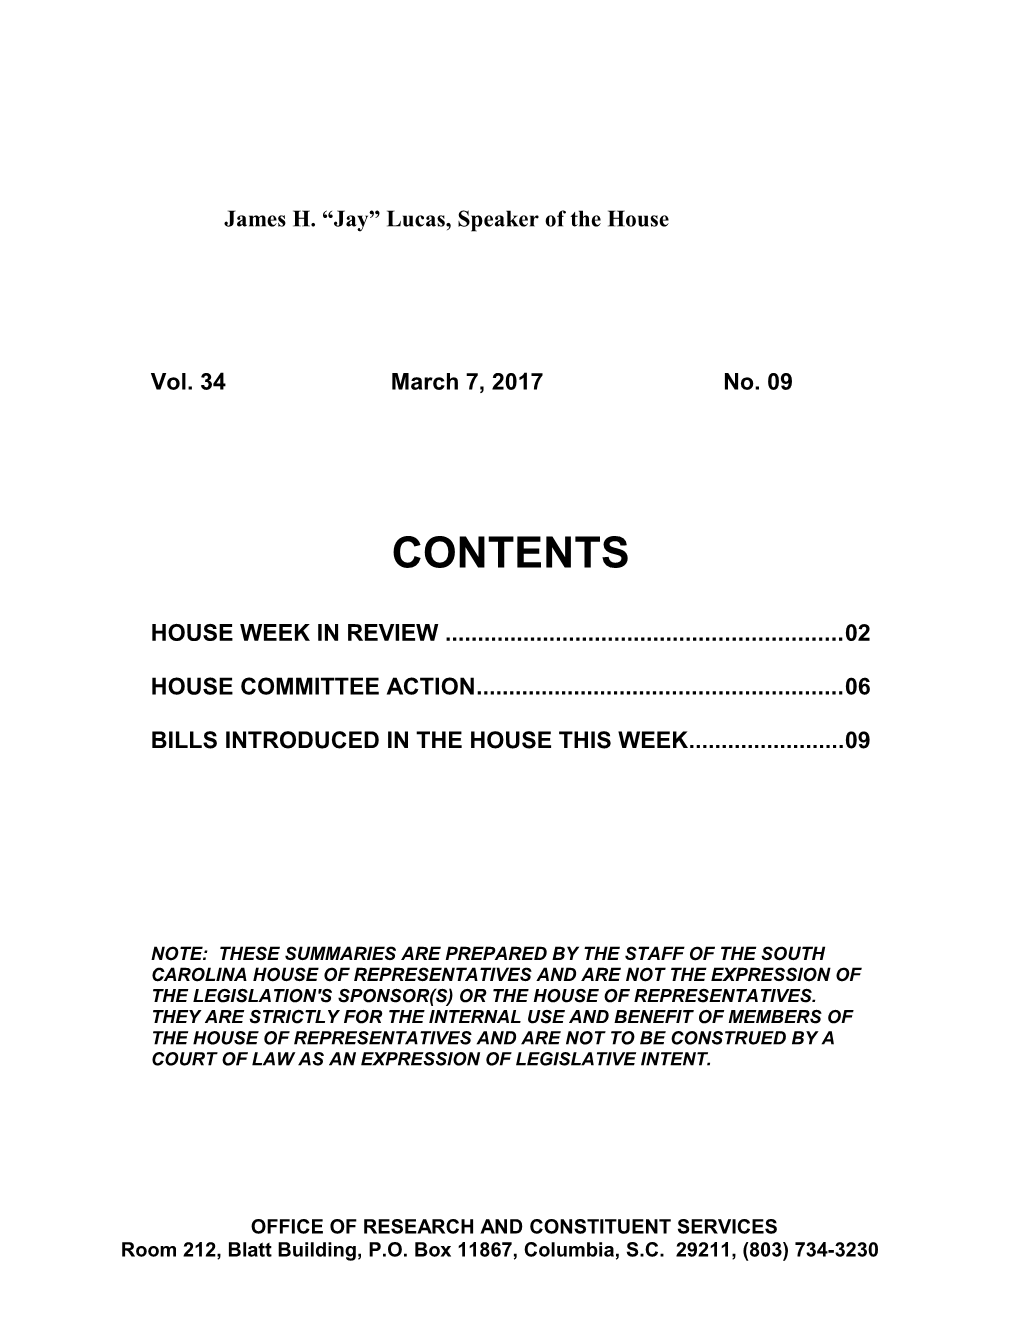 Legislative Update - Vol. 34 No. 09 March 7, 2017 - South Carolina Legislature Online